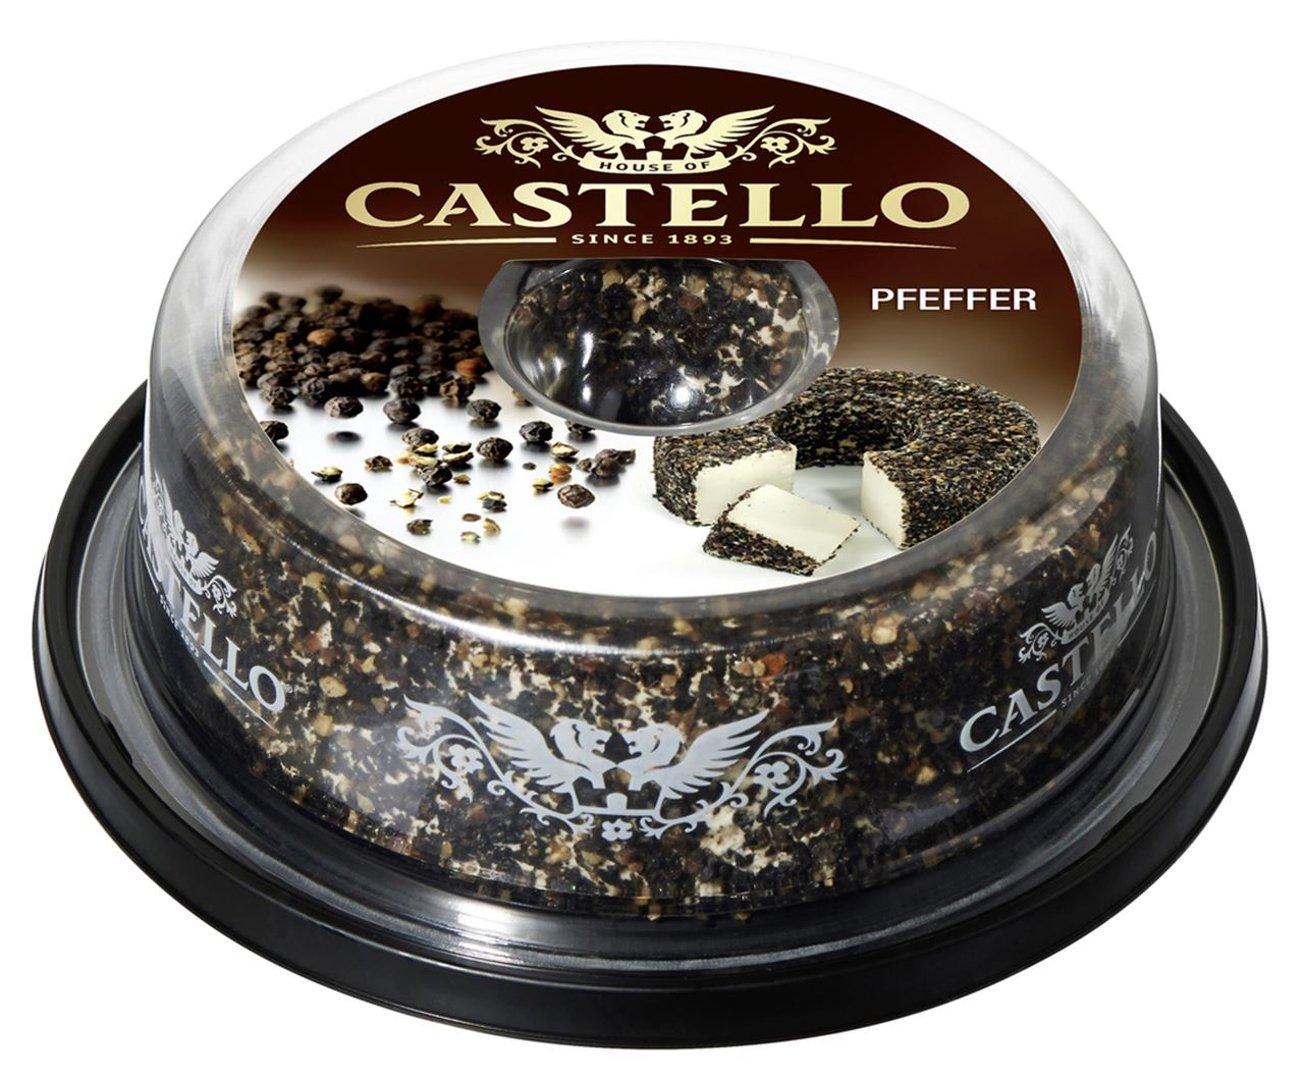 Castello - Frischkäsekranz Pfeffer Doppelrahmstufe, 69 % Fett 125 g Packung